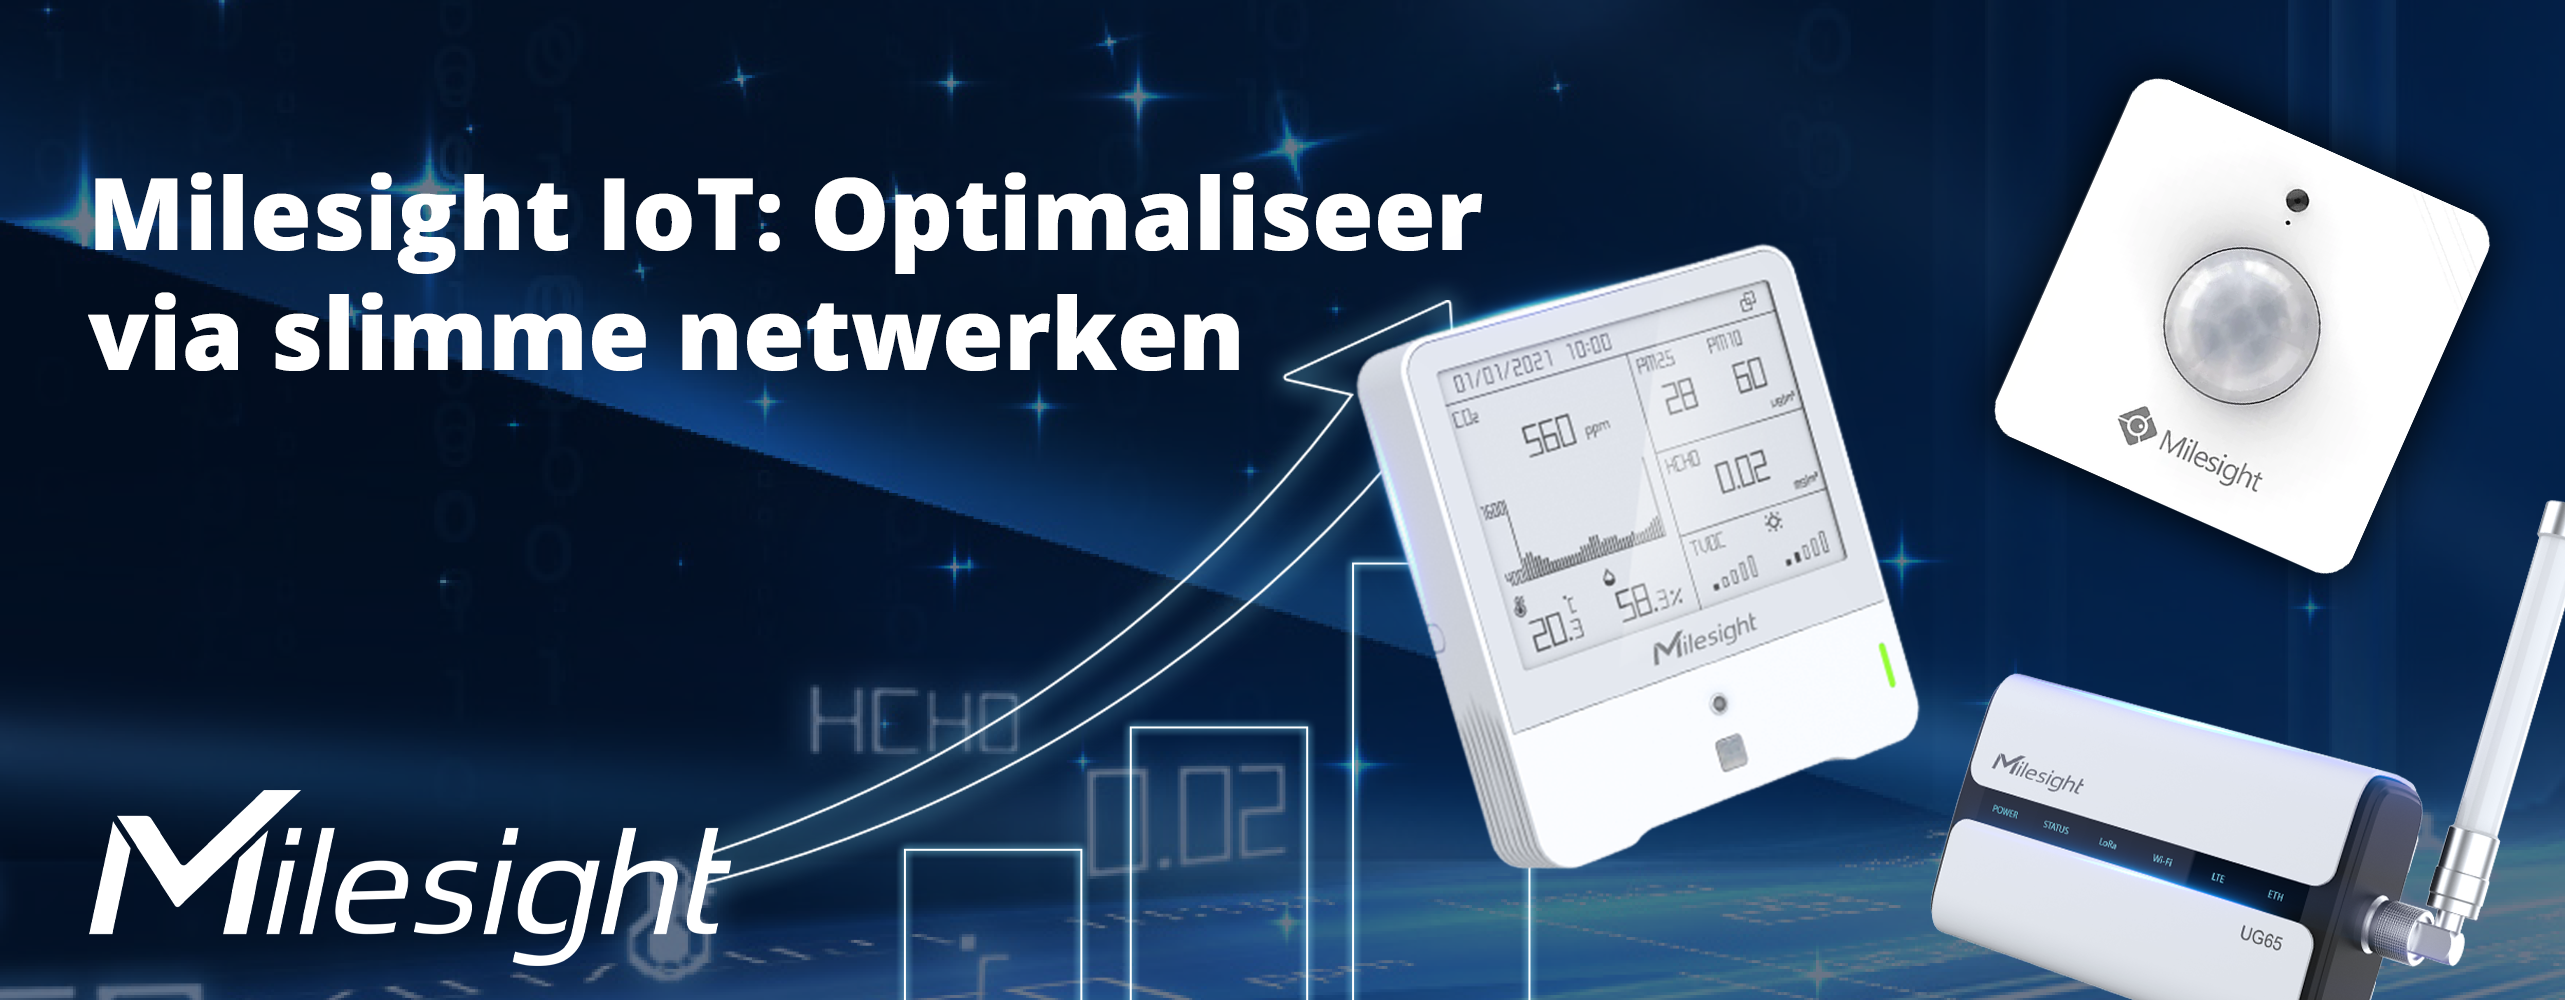 Milesight IoT: optimalisaties via slimme netwerken